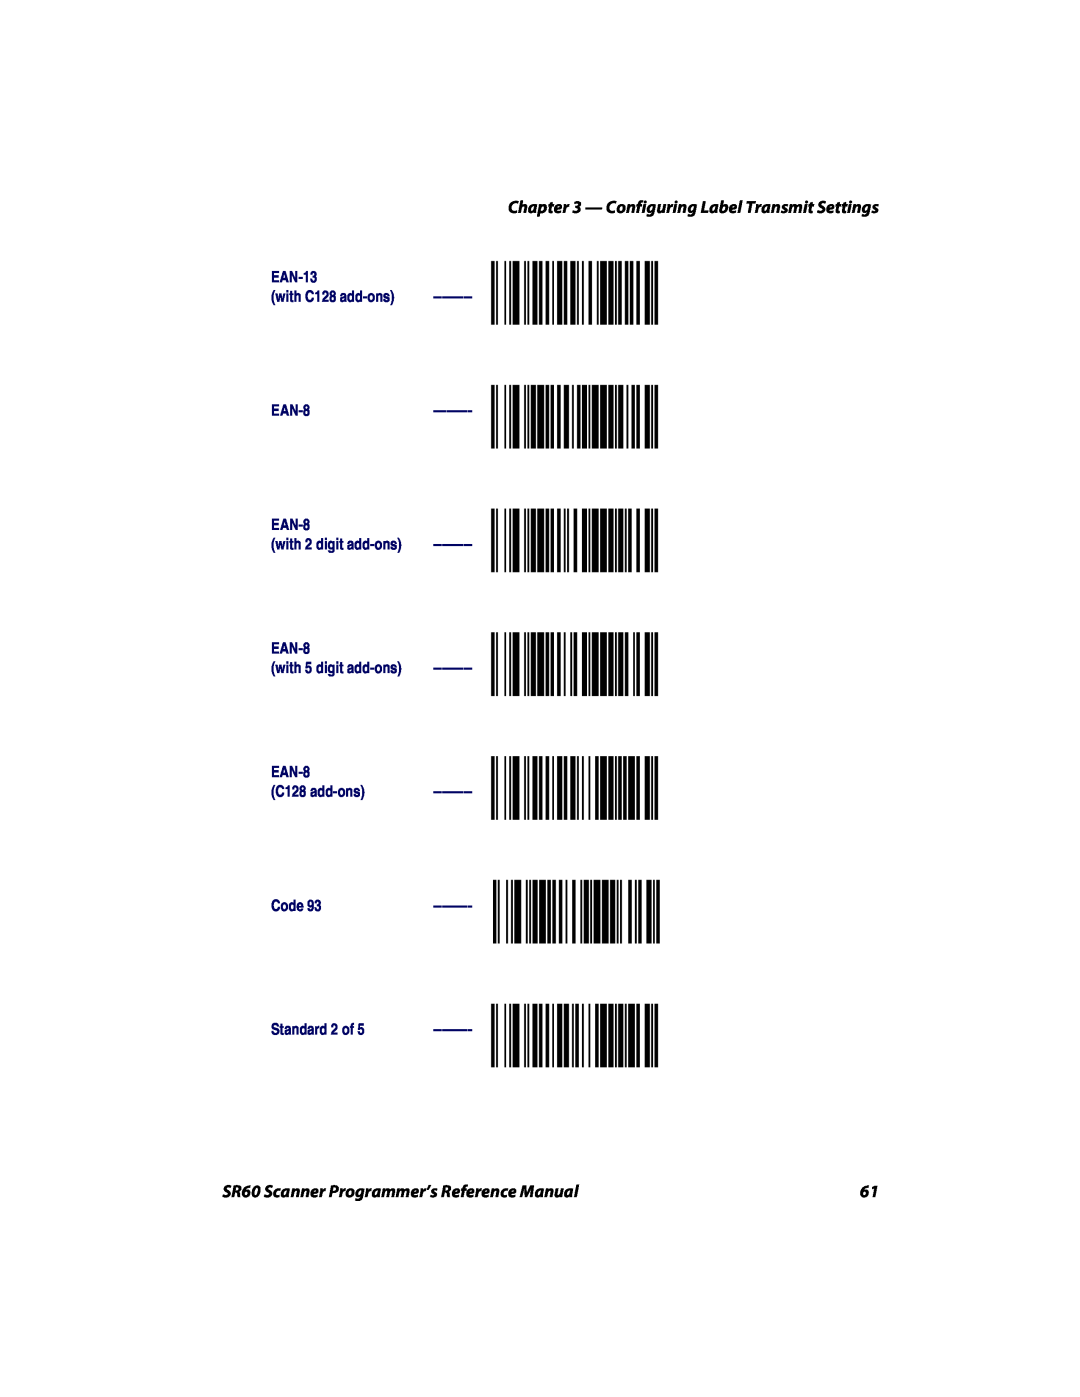 Intermec manual Configuring Label Transmit Settings, SR60 Scanner Programmer’s Reference Manual 